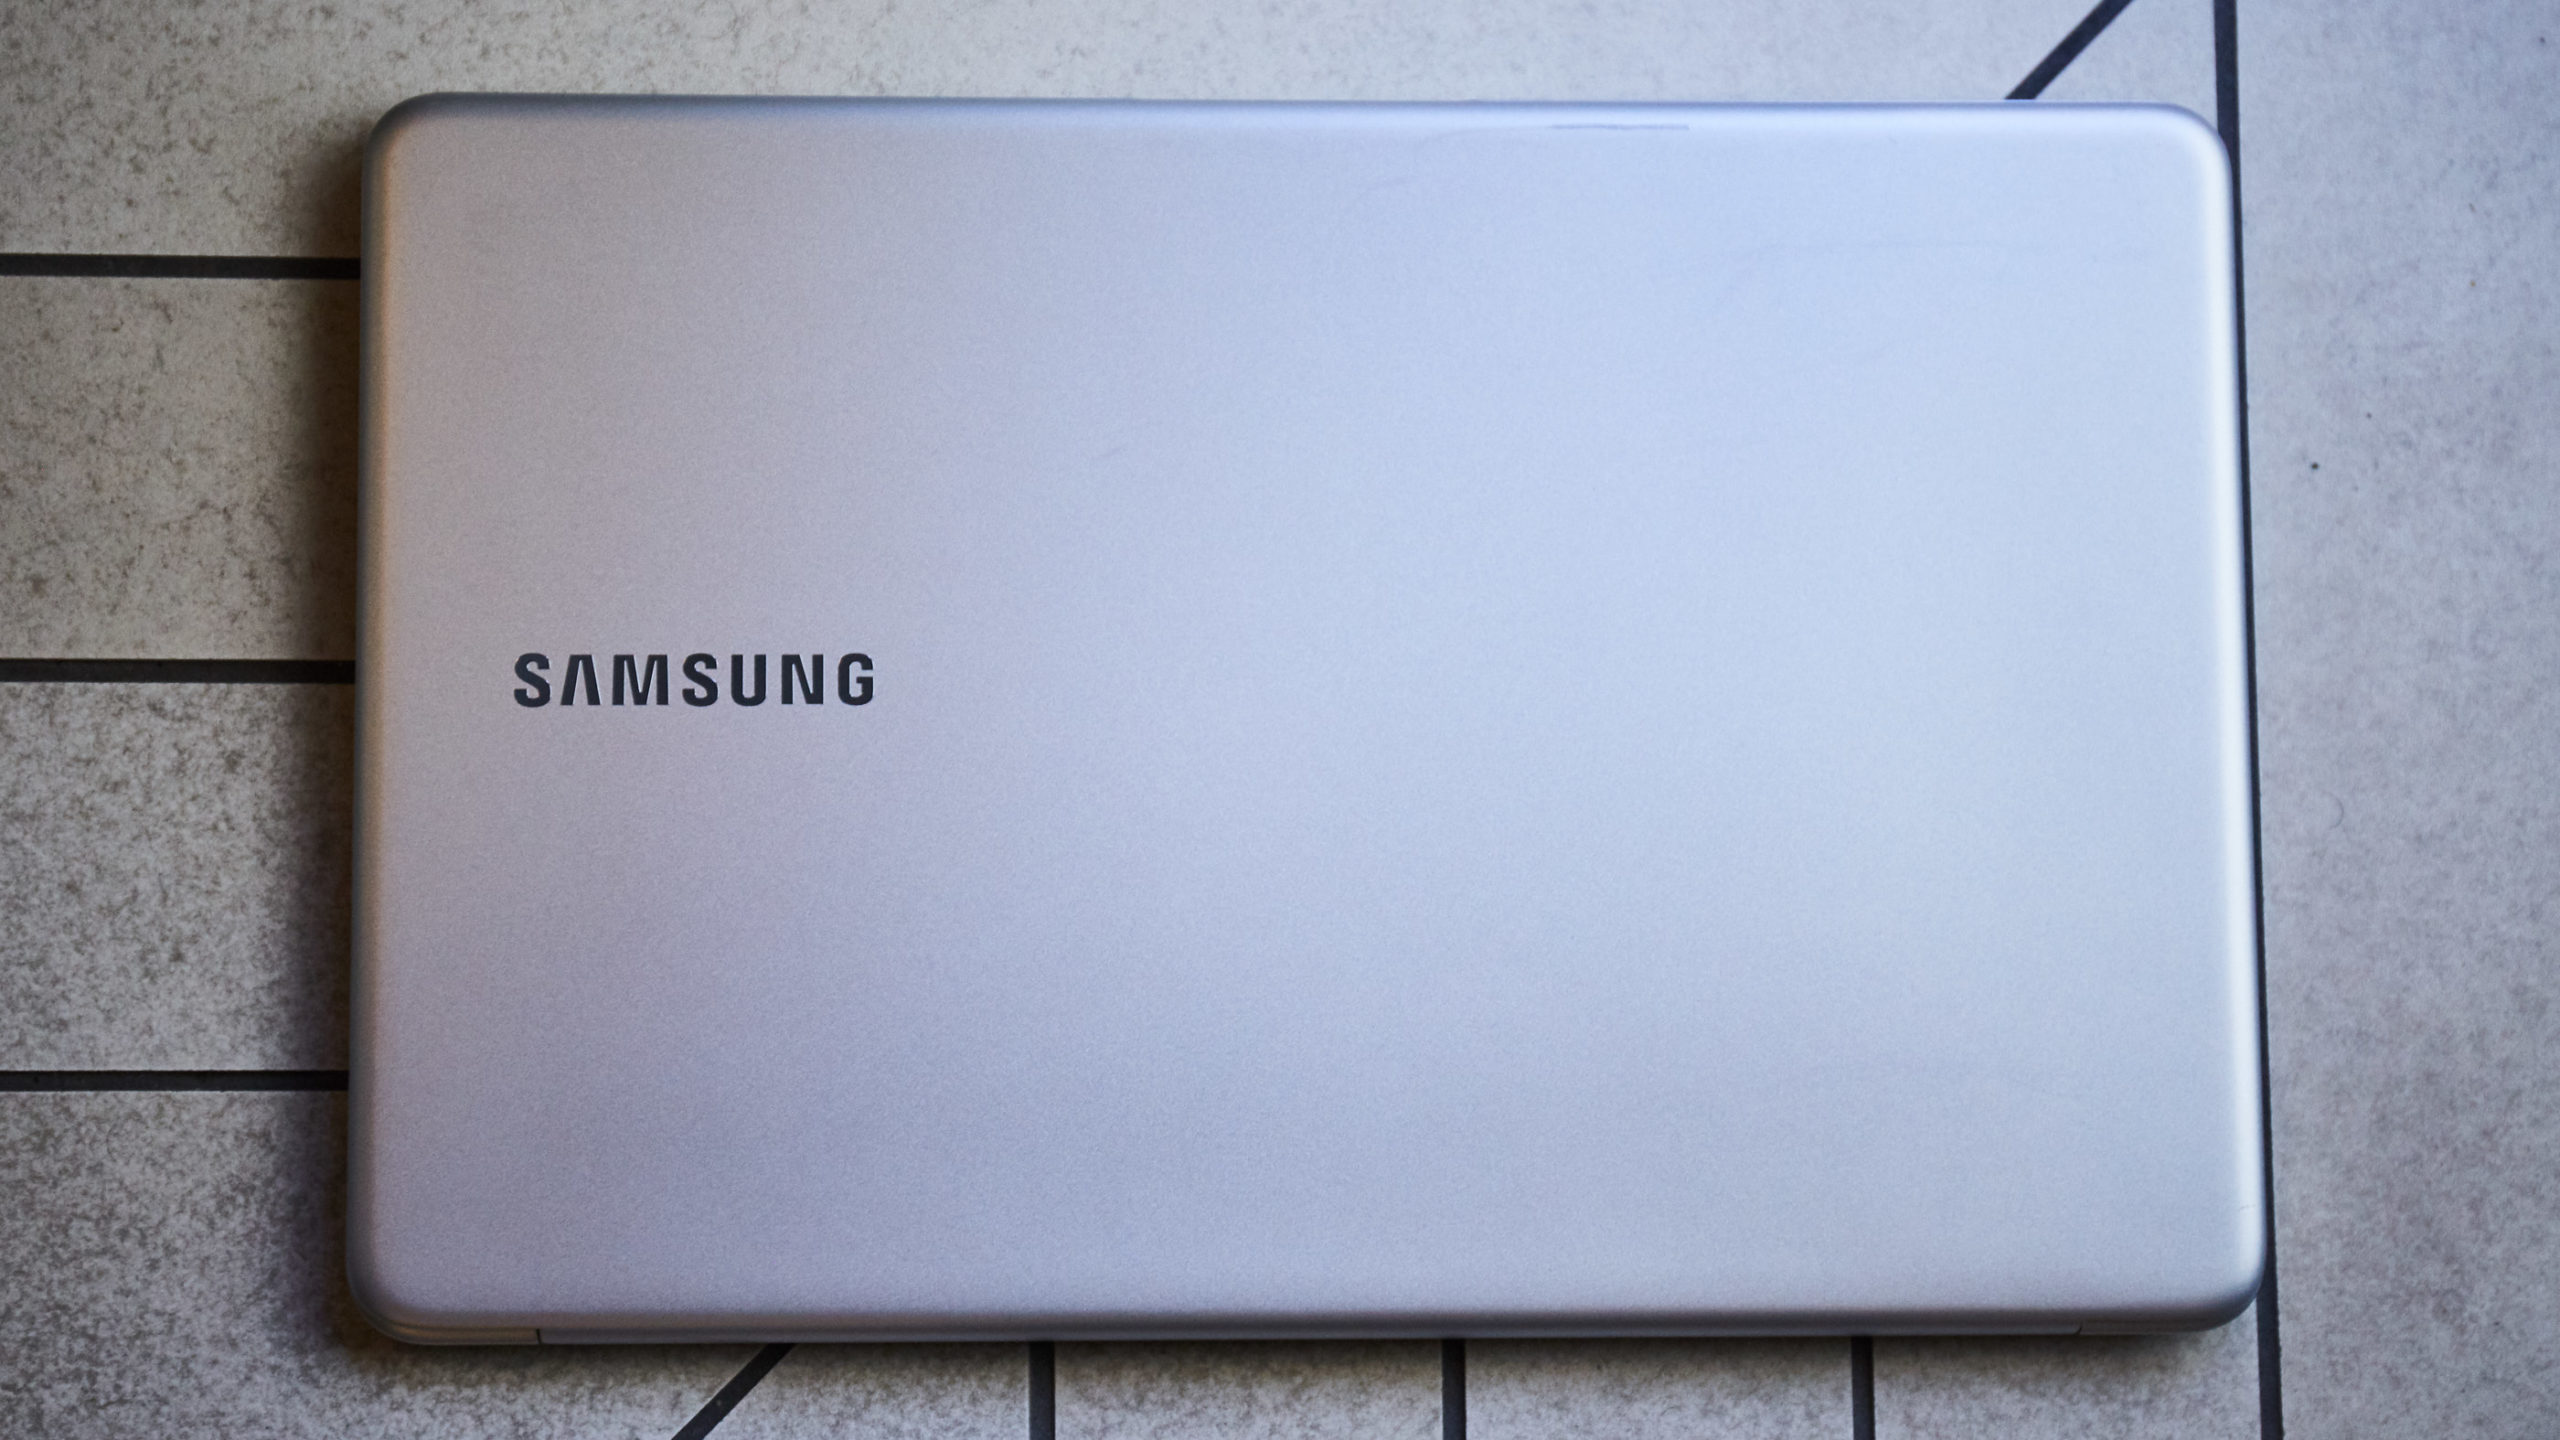 Samsung Notebook 9: The Gizmodo Review